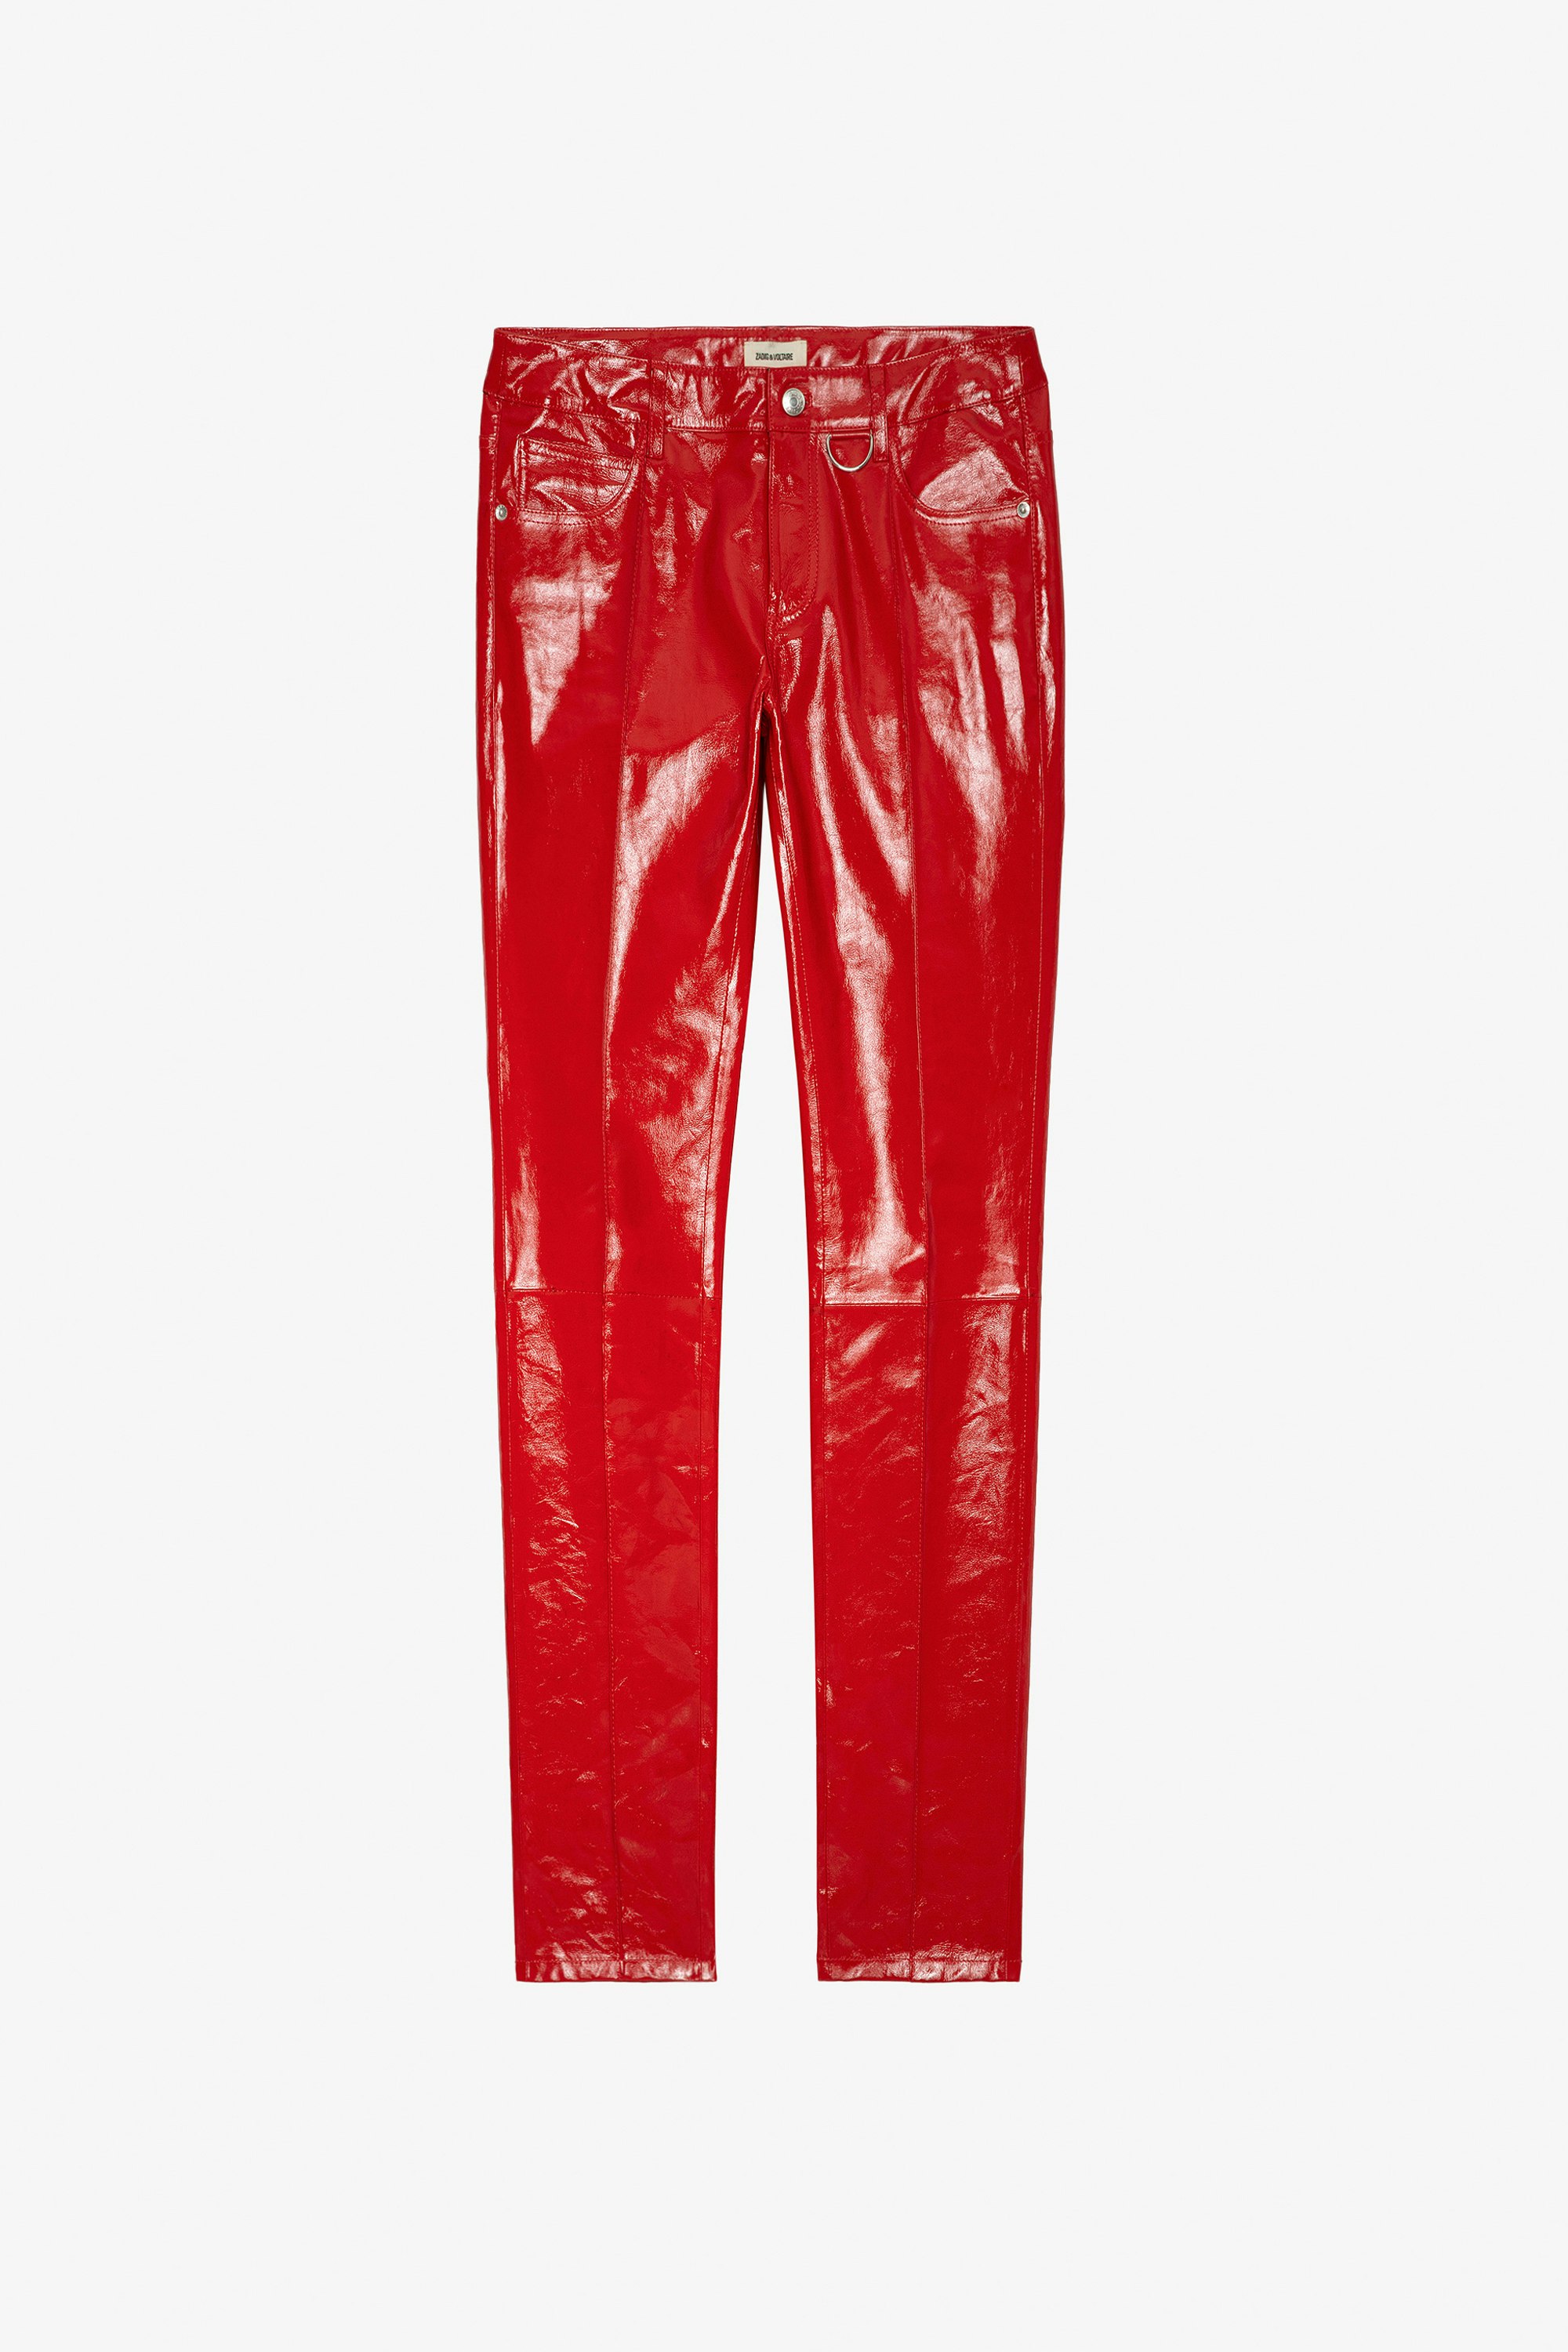 Pantaloni Peko vinile - Pantaloni in pelle vinile rossi da donna.